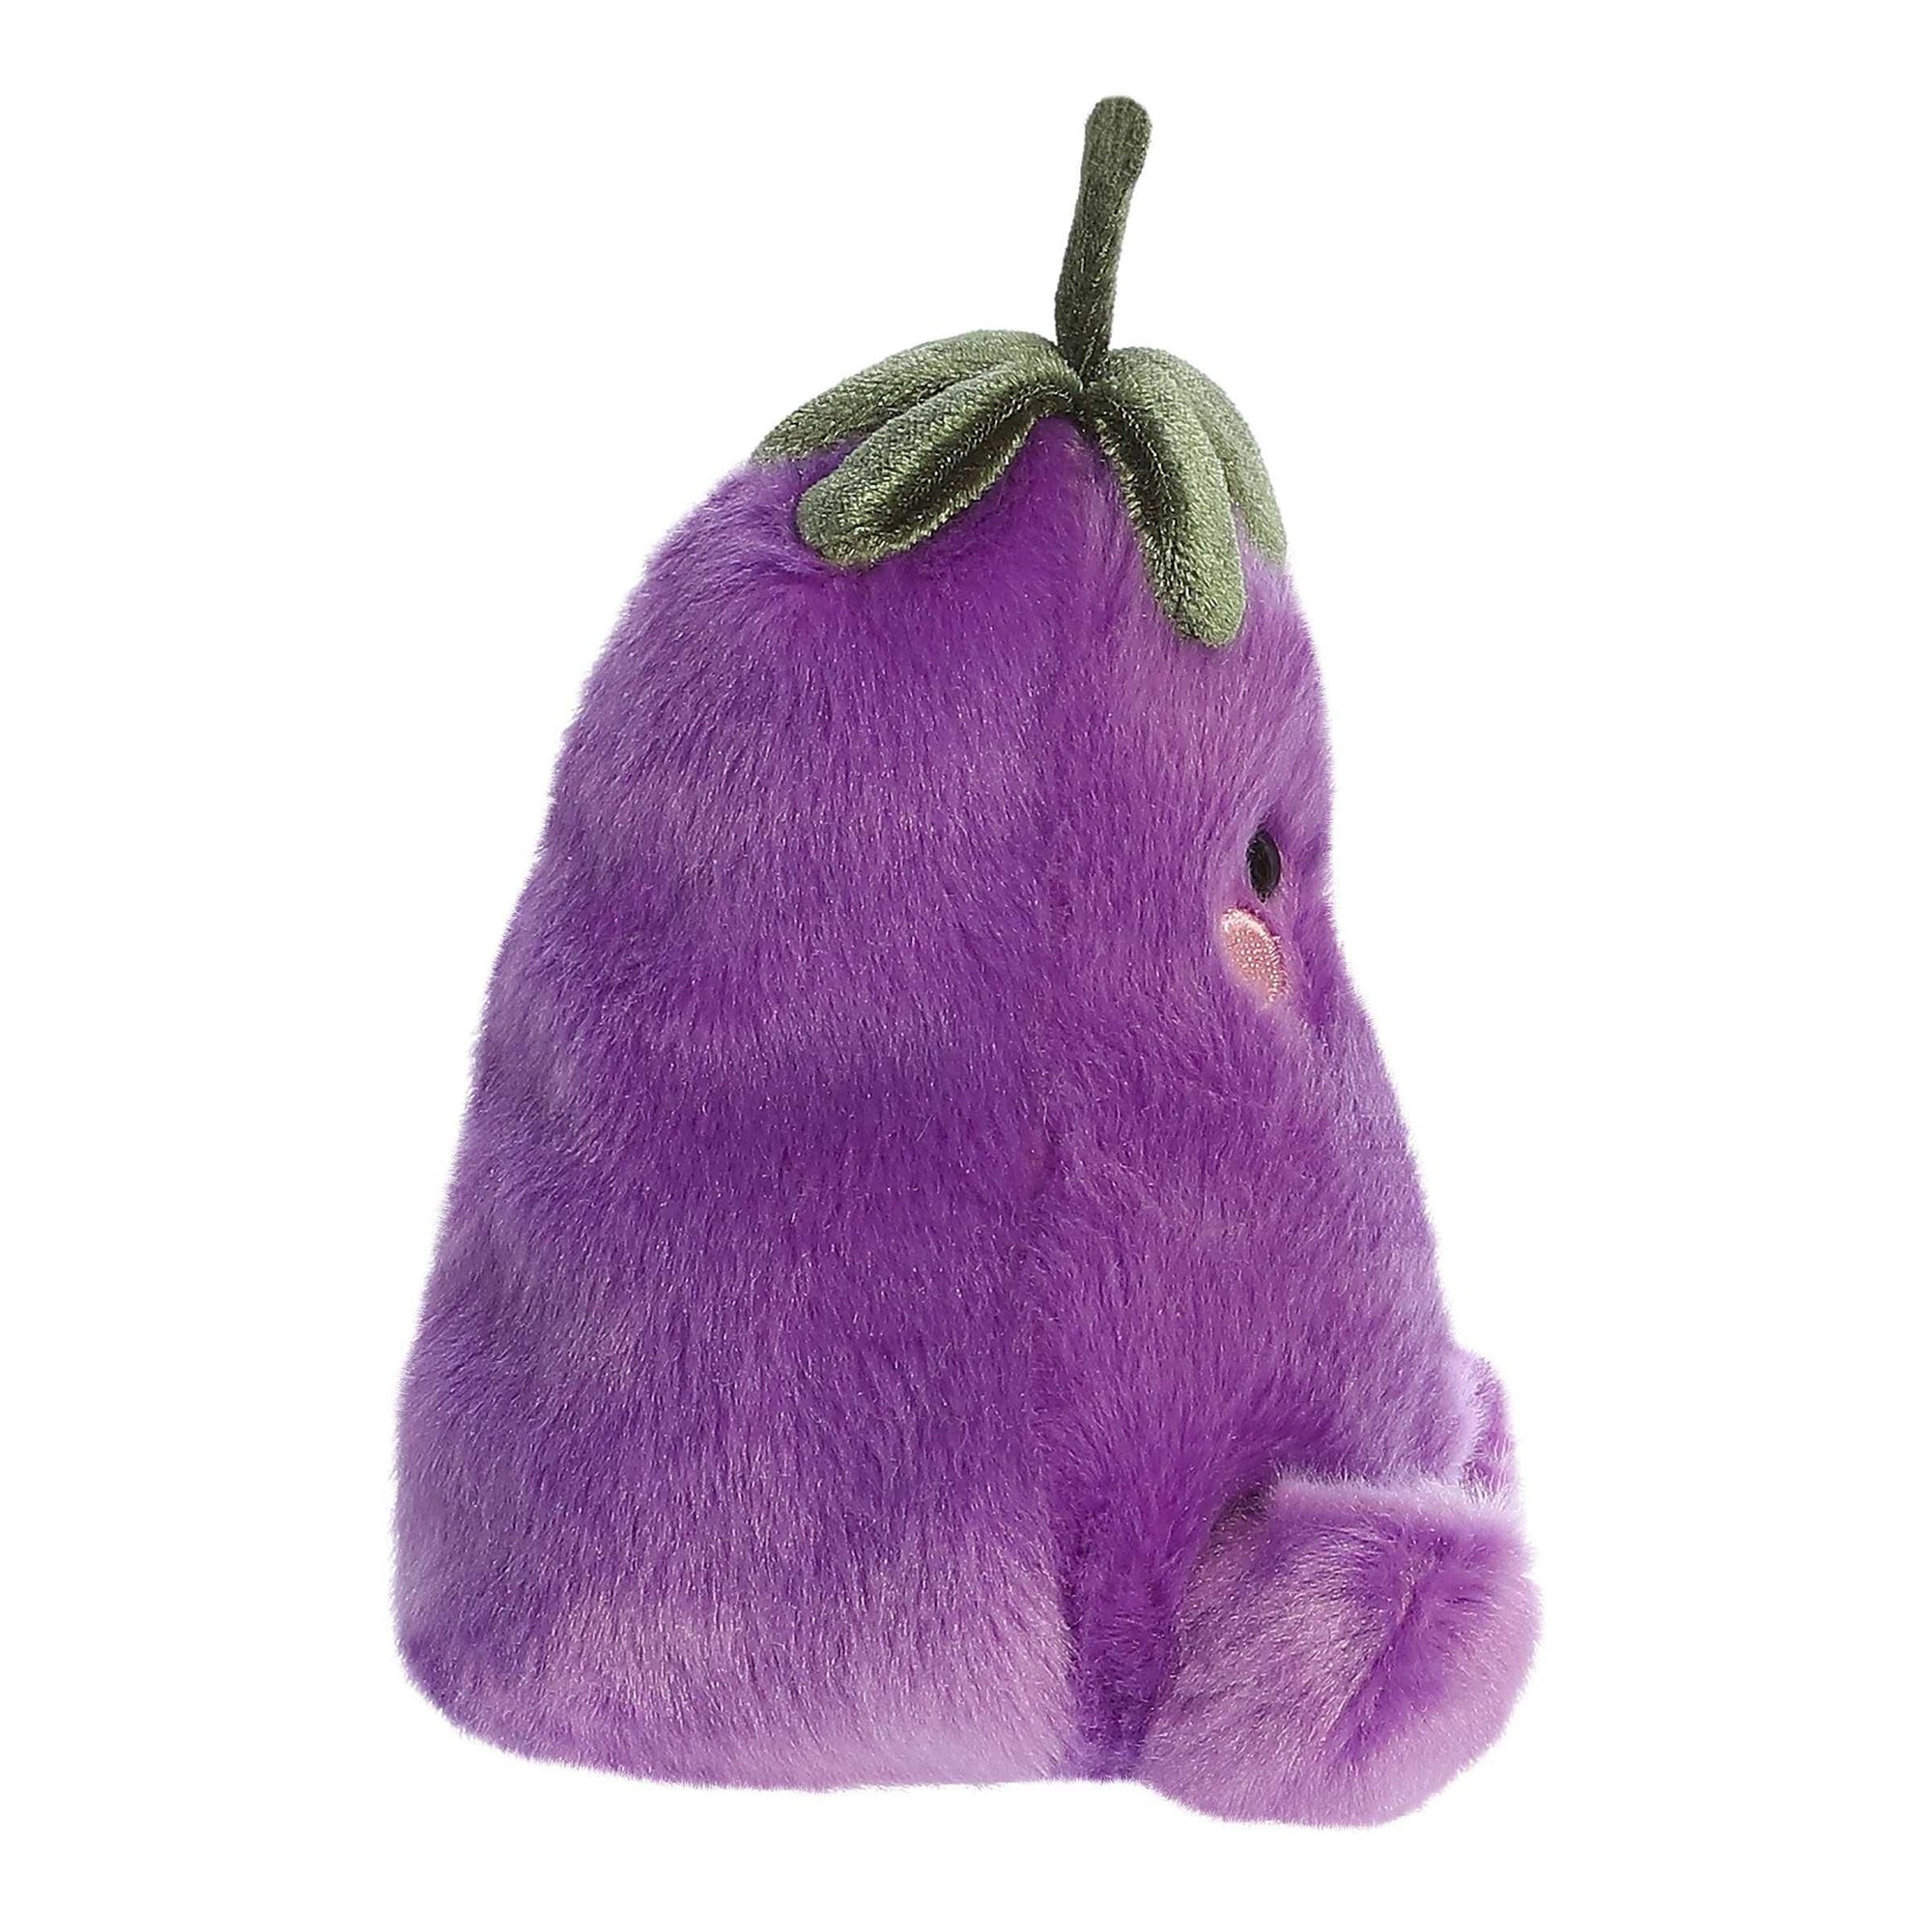 Cuddly toy Eggplant - Palm Pals